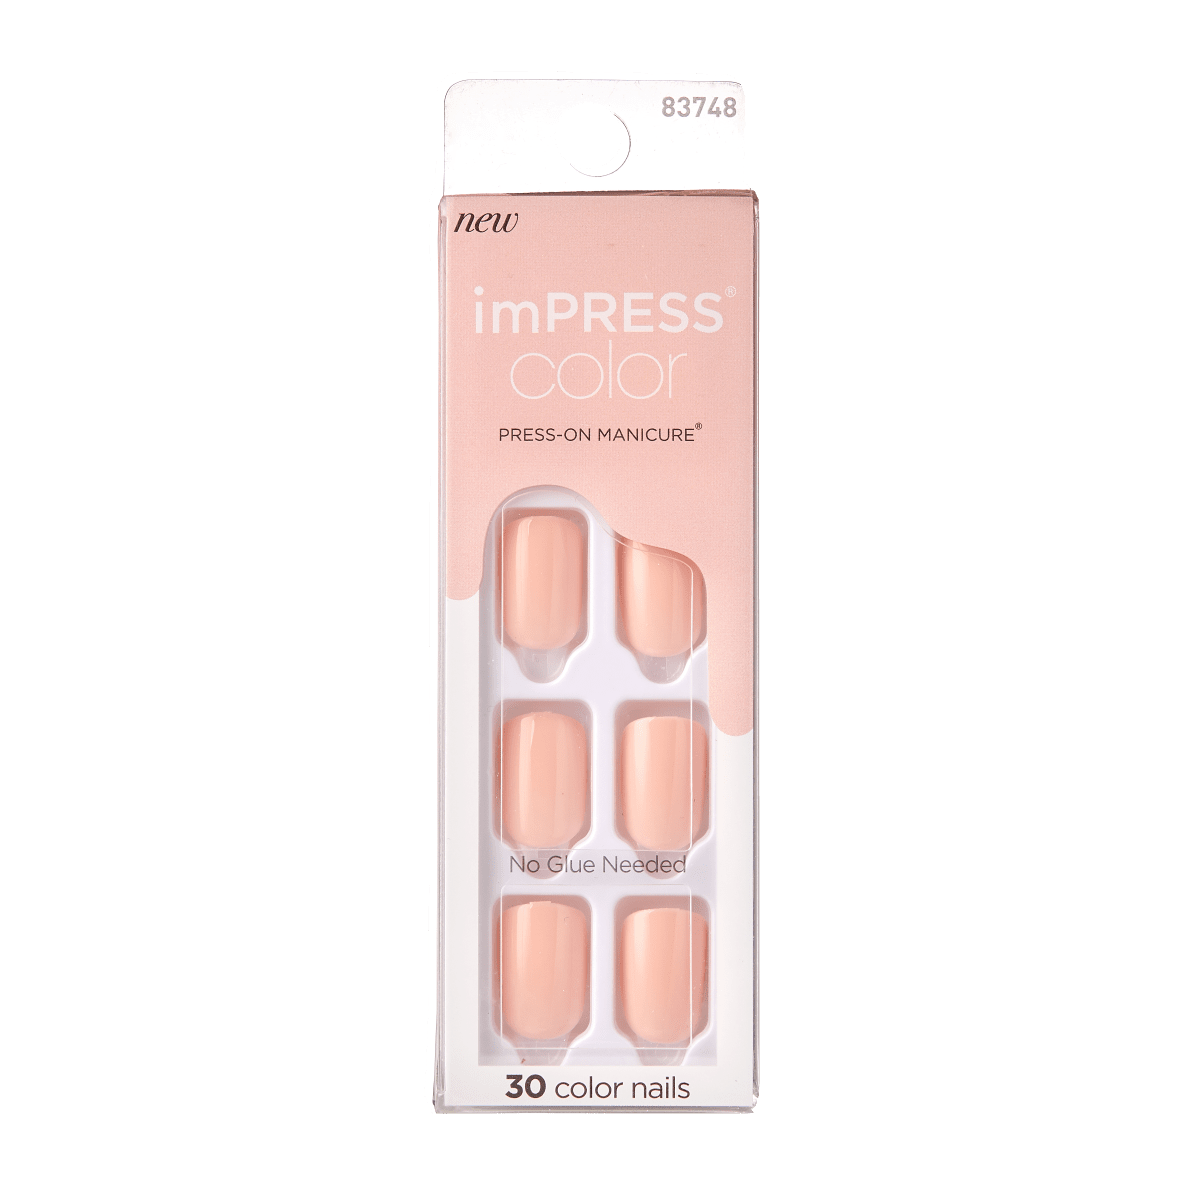 imPRESS Color Press-On Nails - Peevish Pink